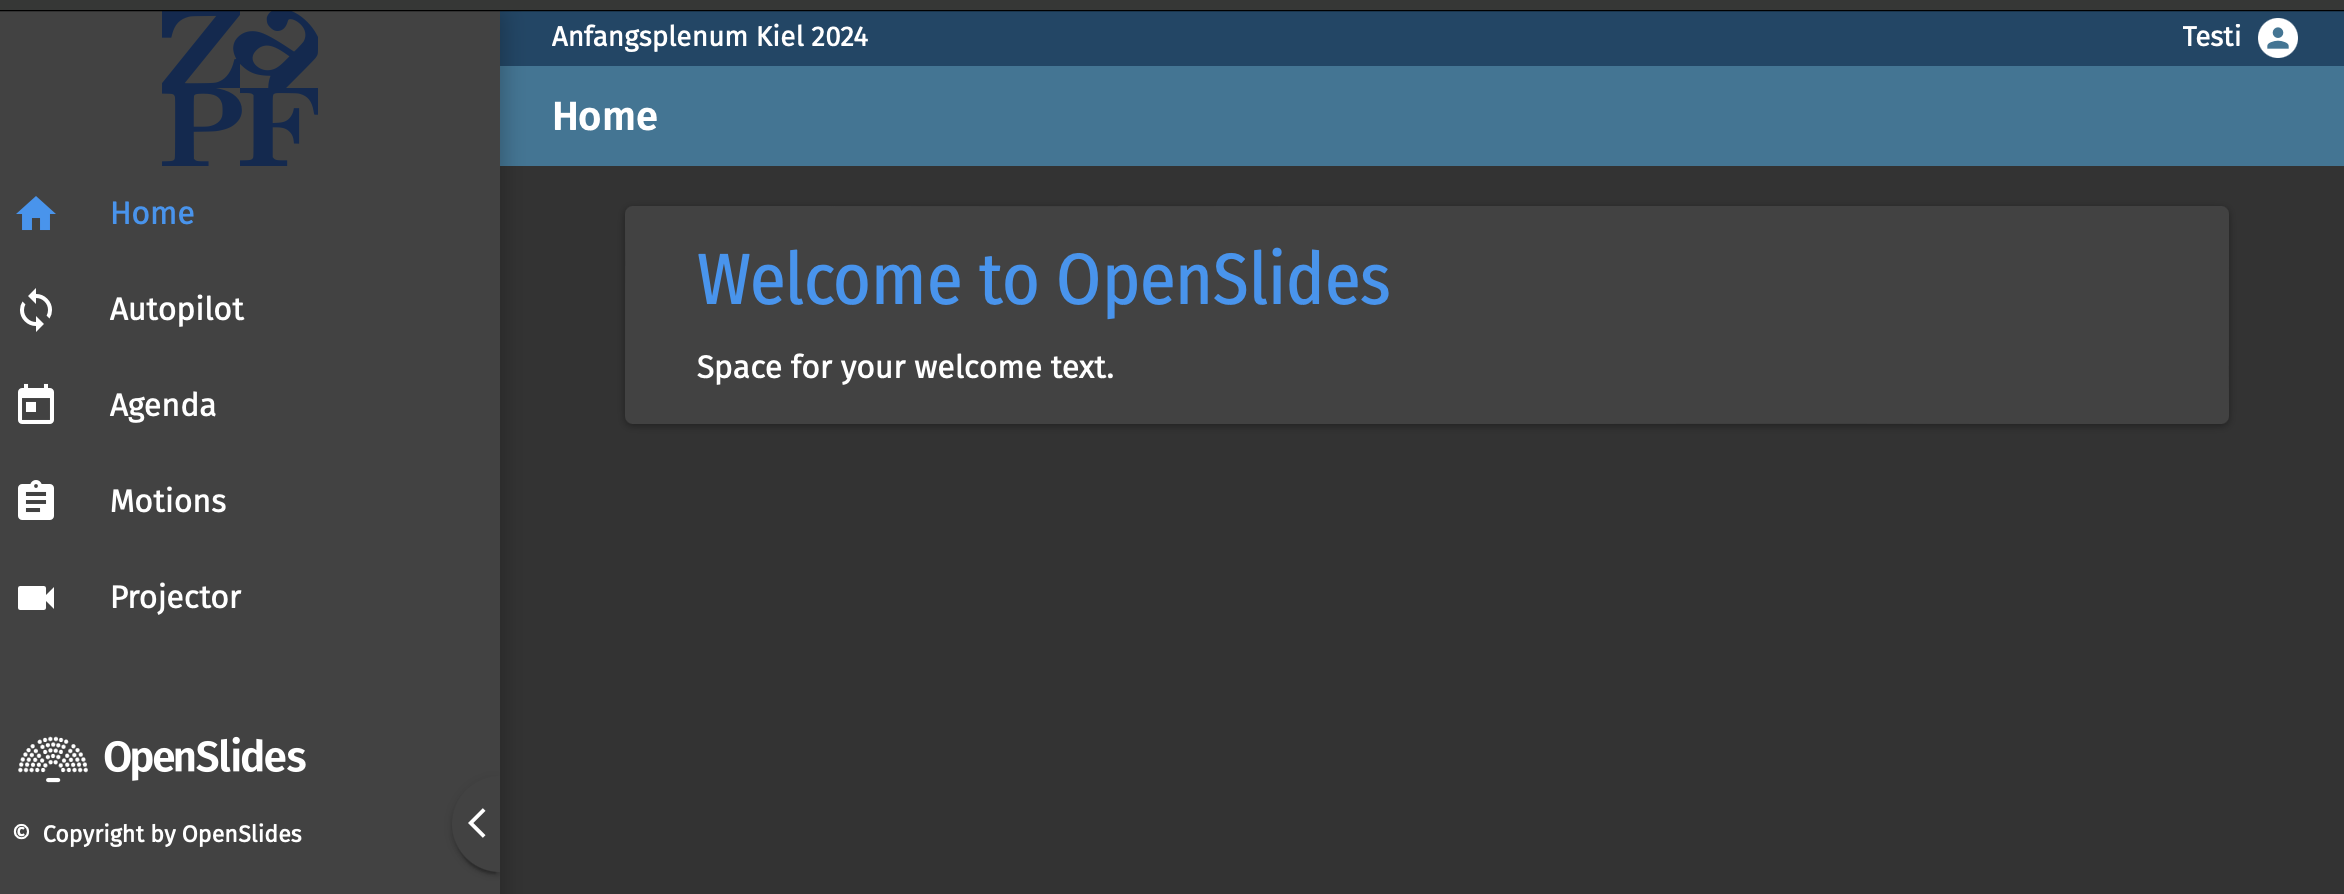 Openslides2.png